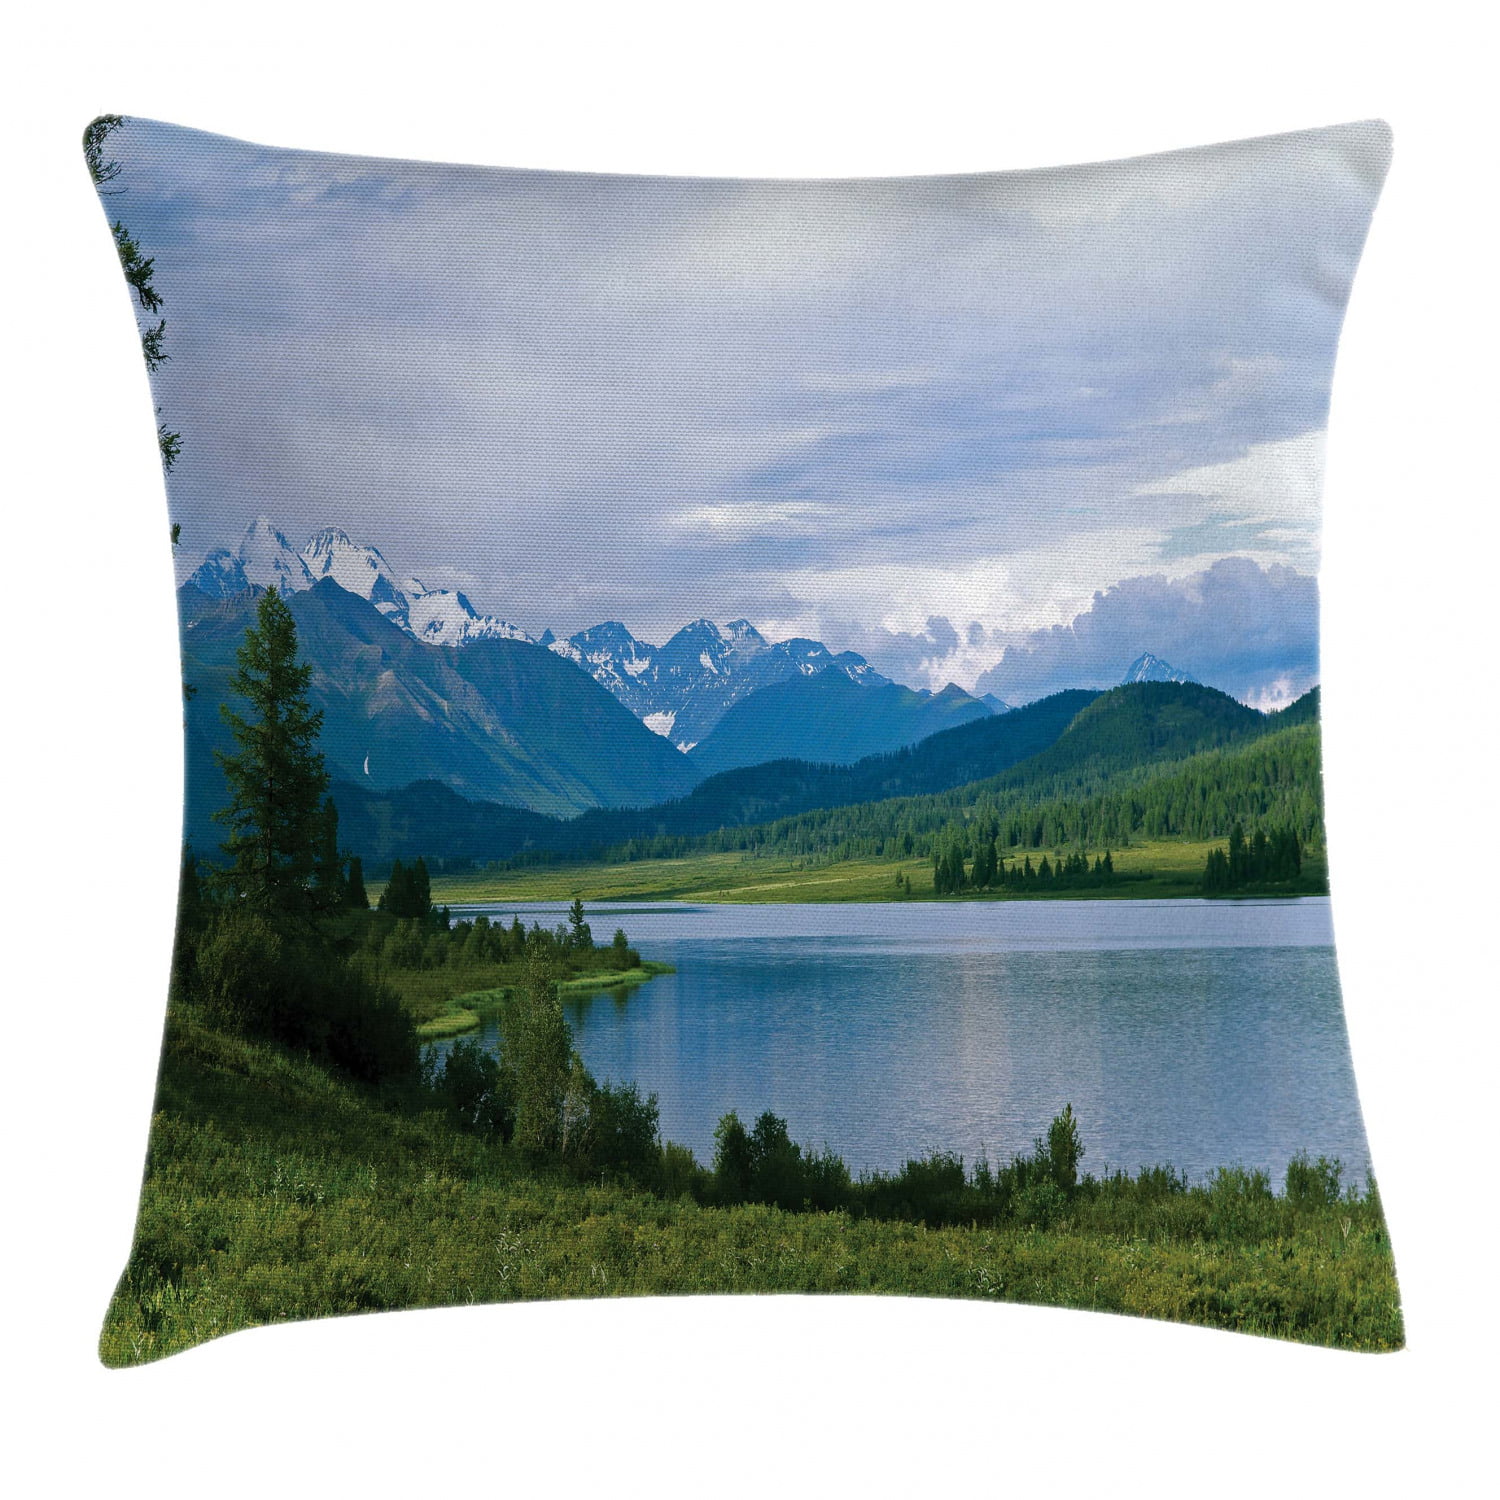 Montana Appareal Big Sky Montana The Mountain State Outdoor Lover Throw Pillow Multicolor 18x18 